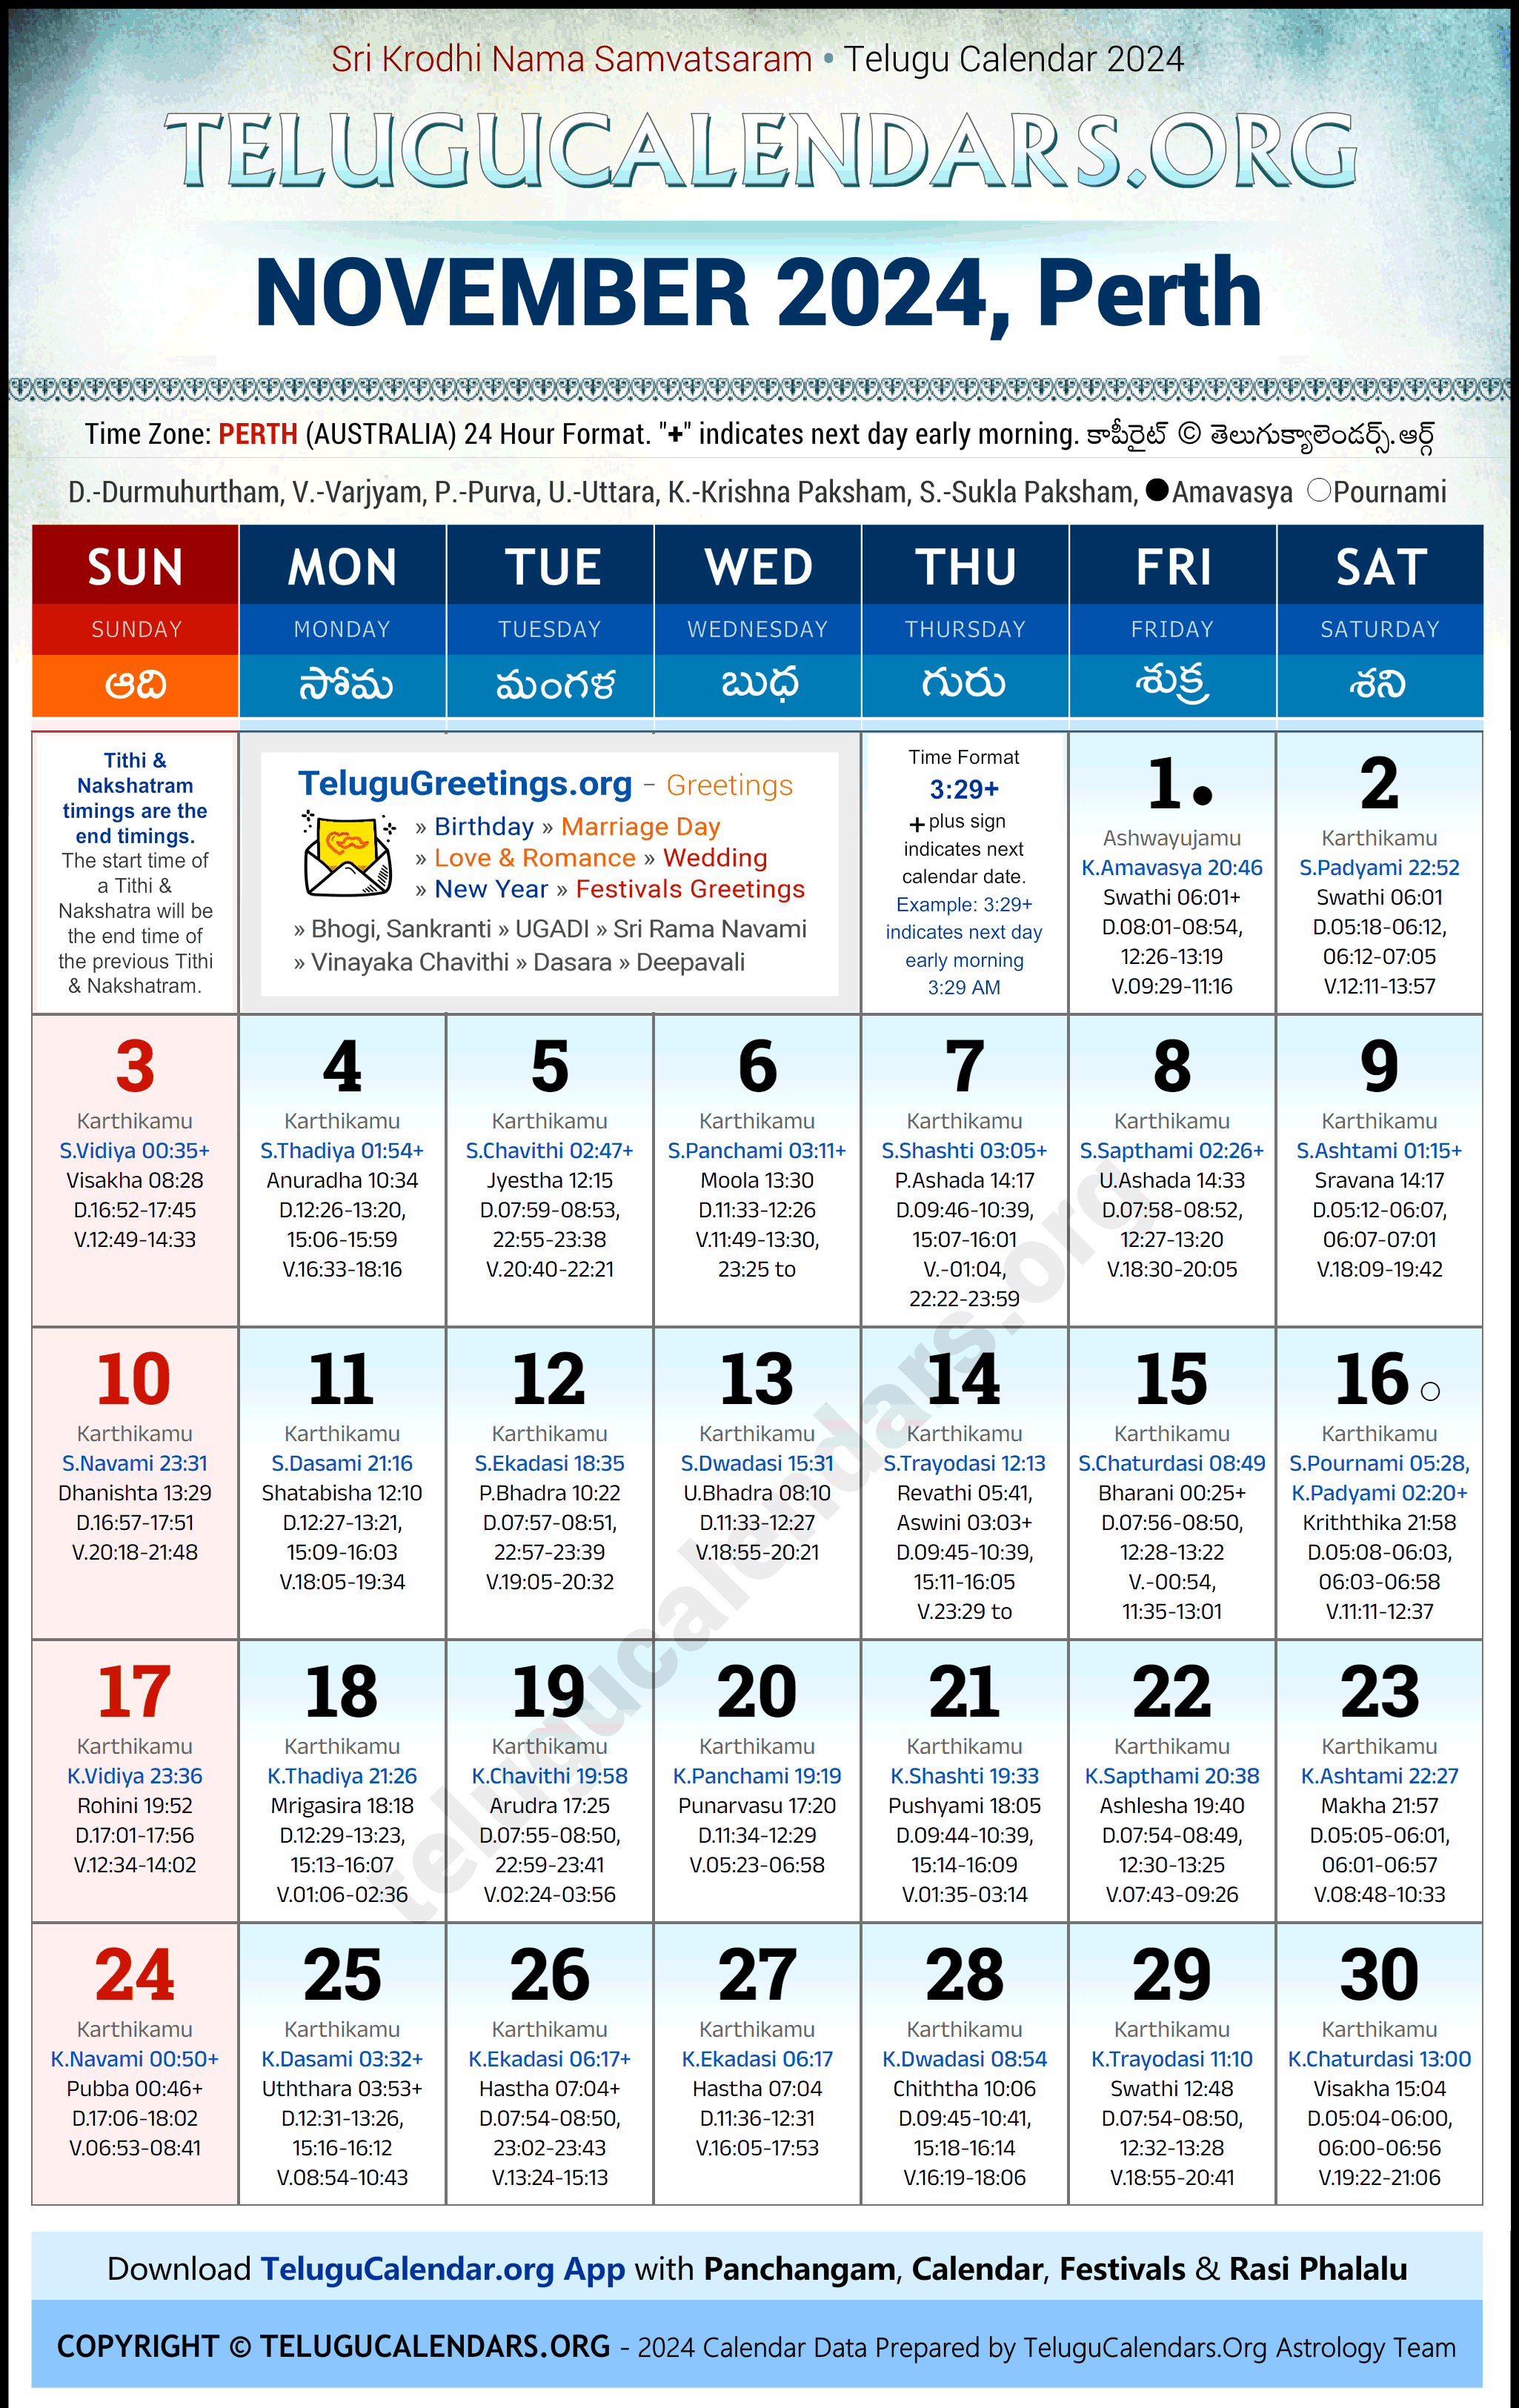 Telugu Calendar 2024 November Festivals for Perth